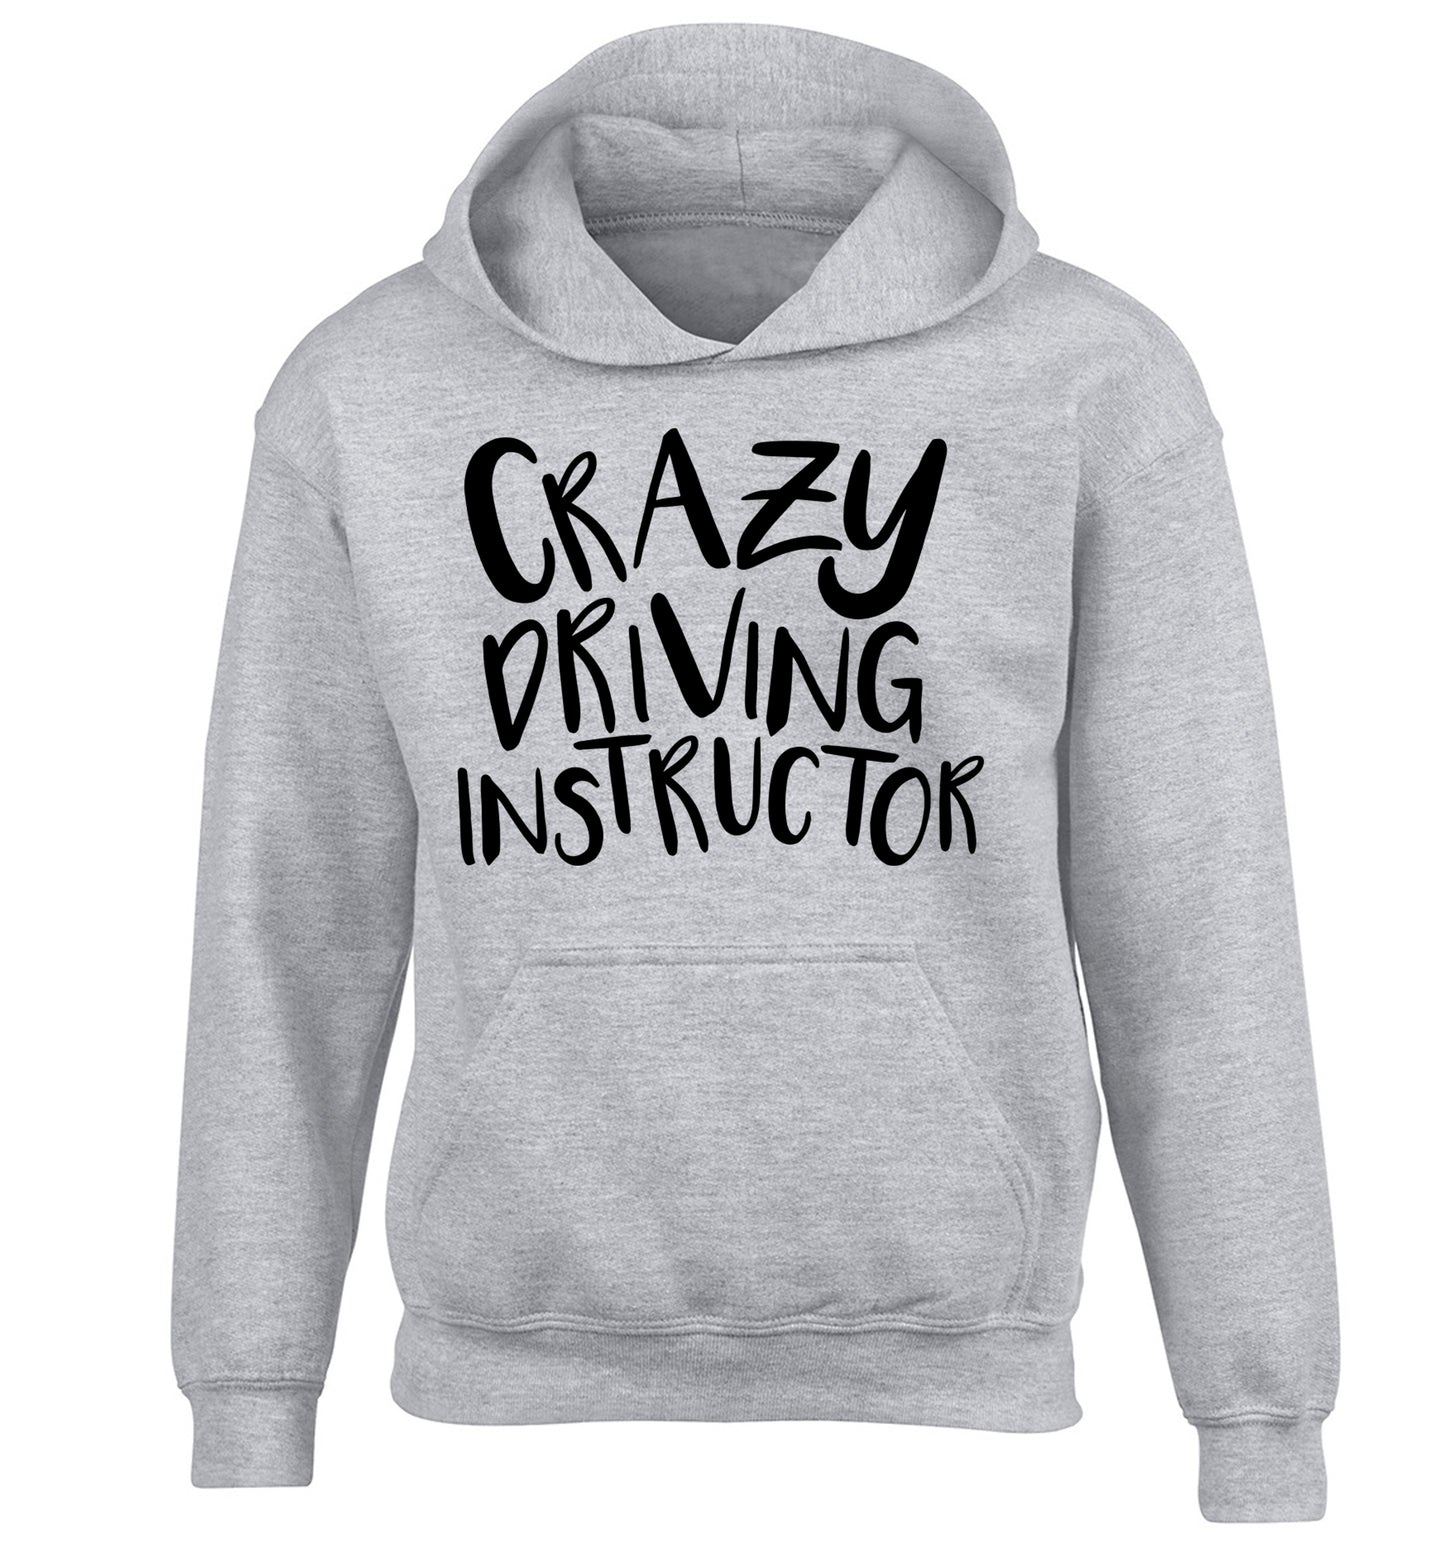 Crazy driving instructor children's grey hoodie 12-13 Years